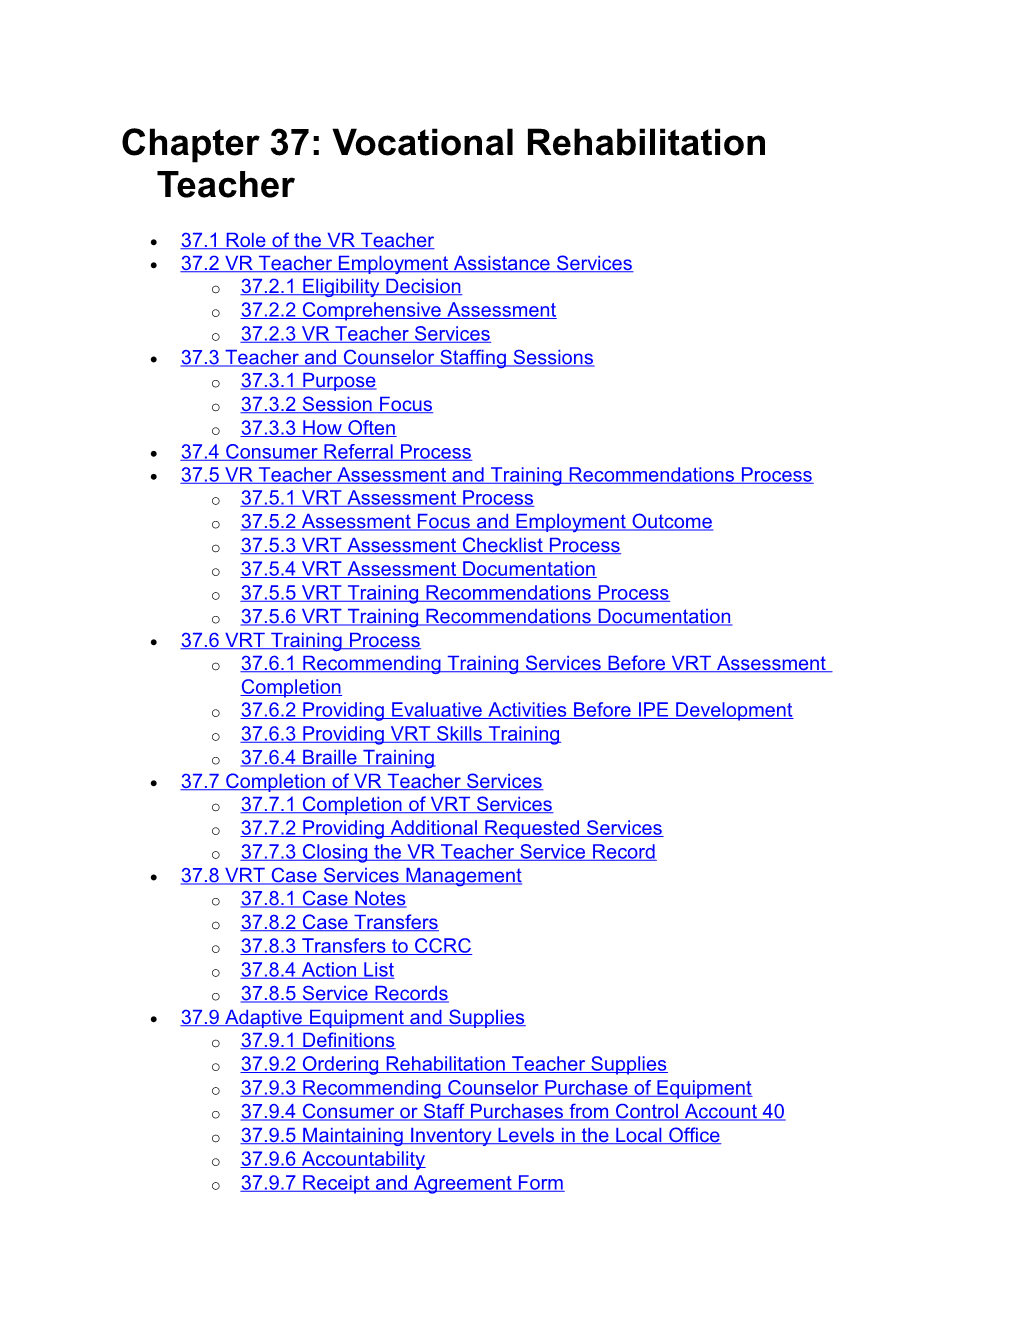 Chapter 37: Vocational Rehabilitation Teacher